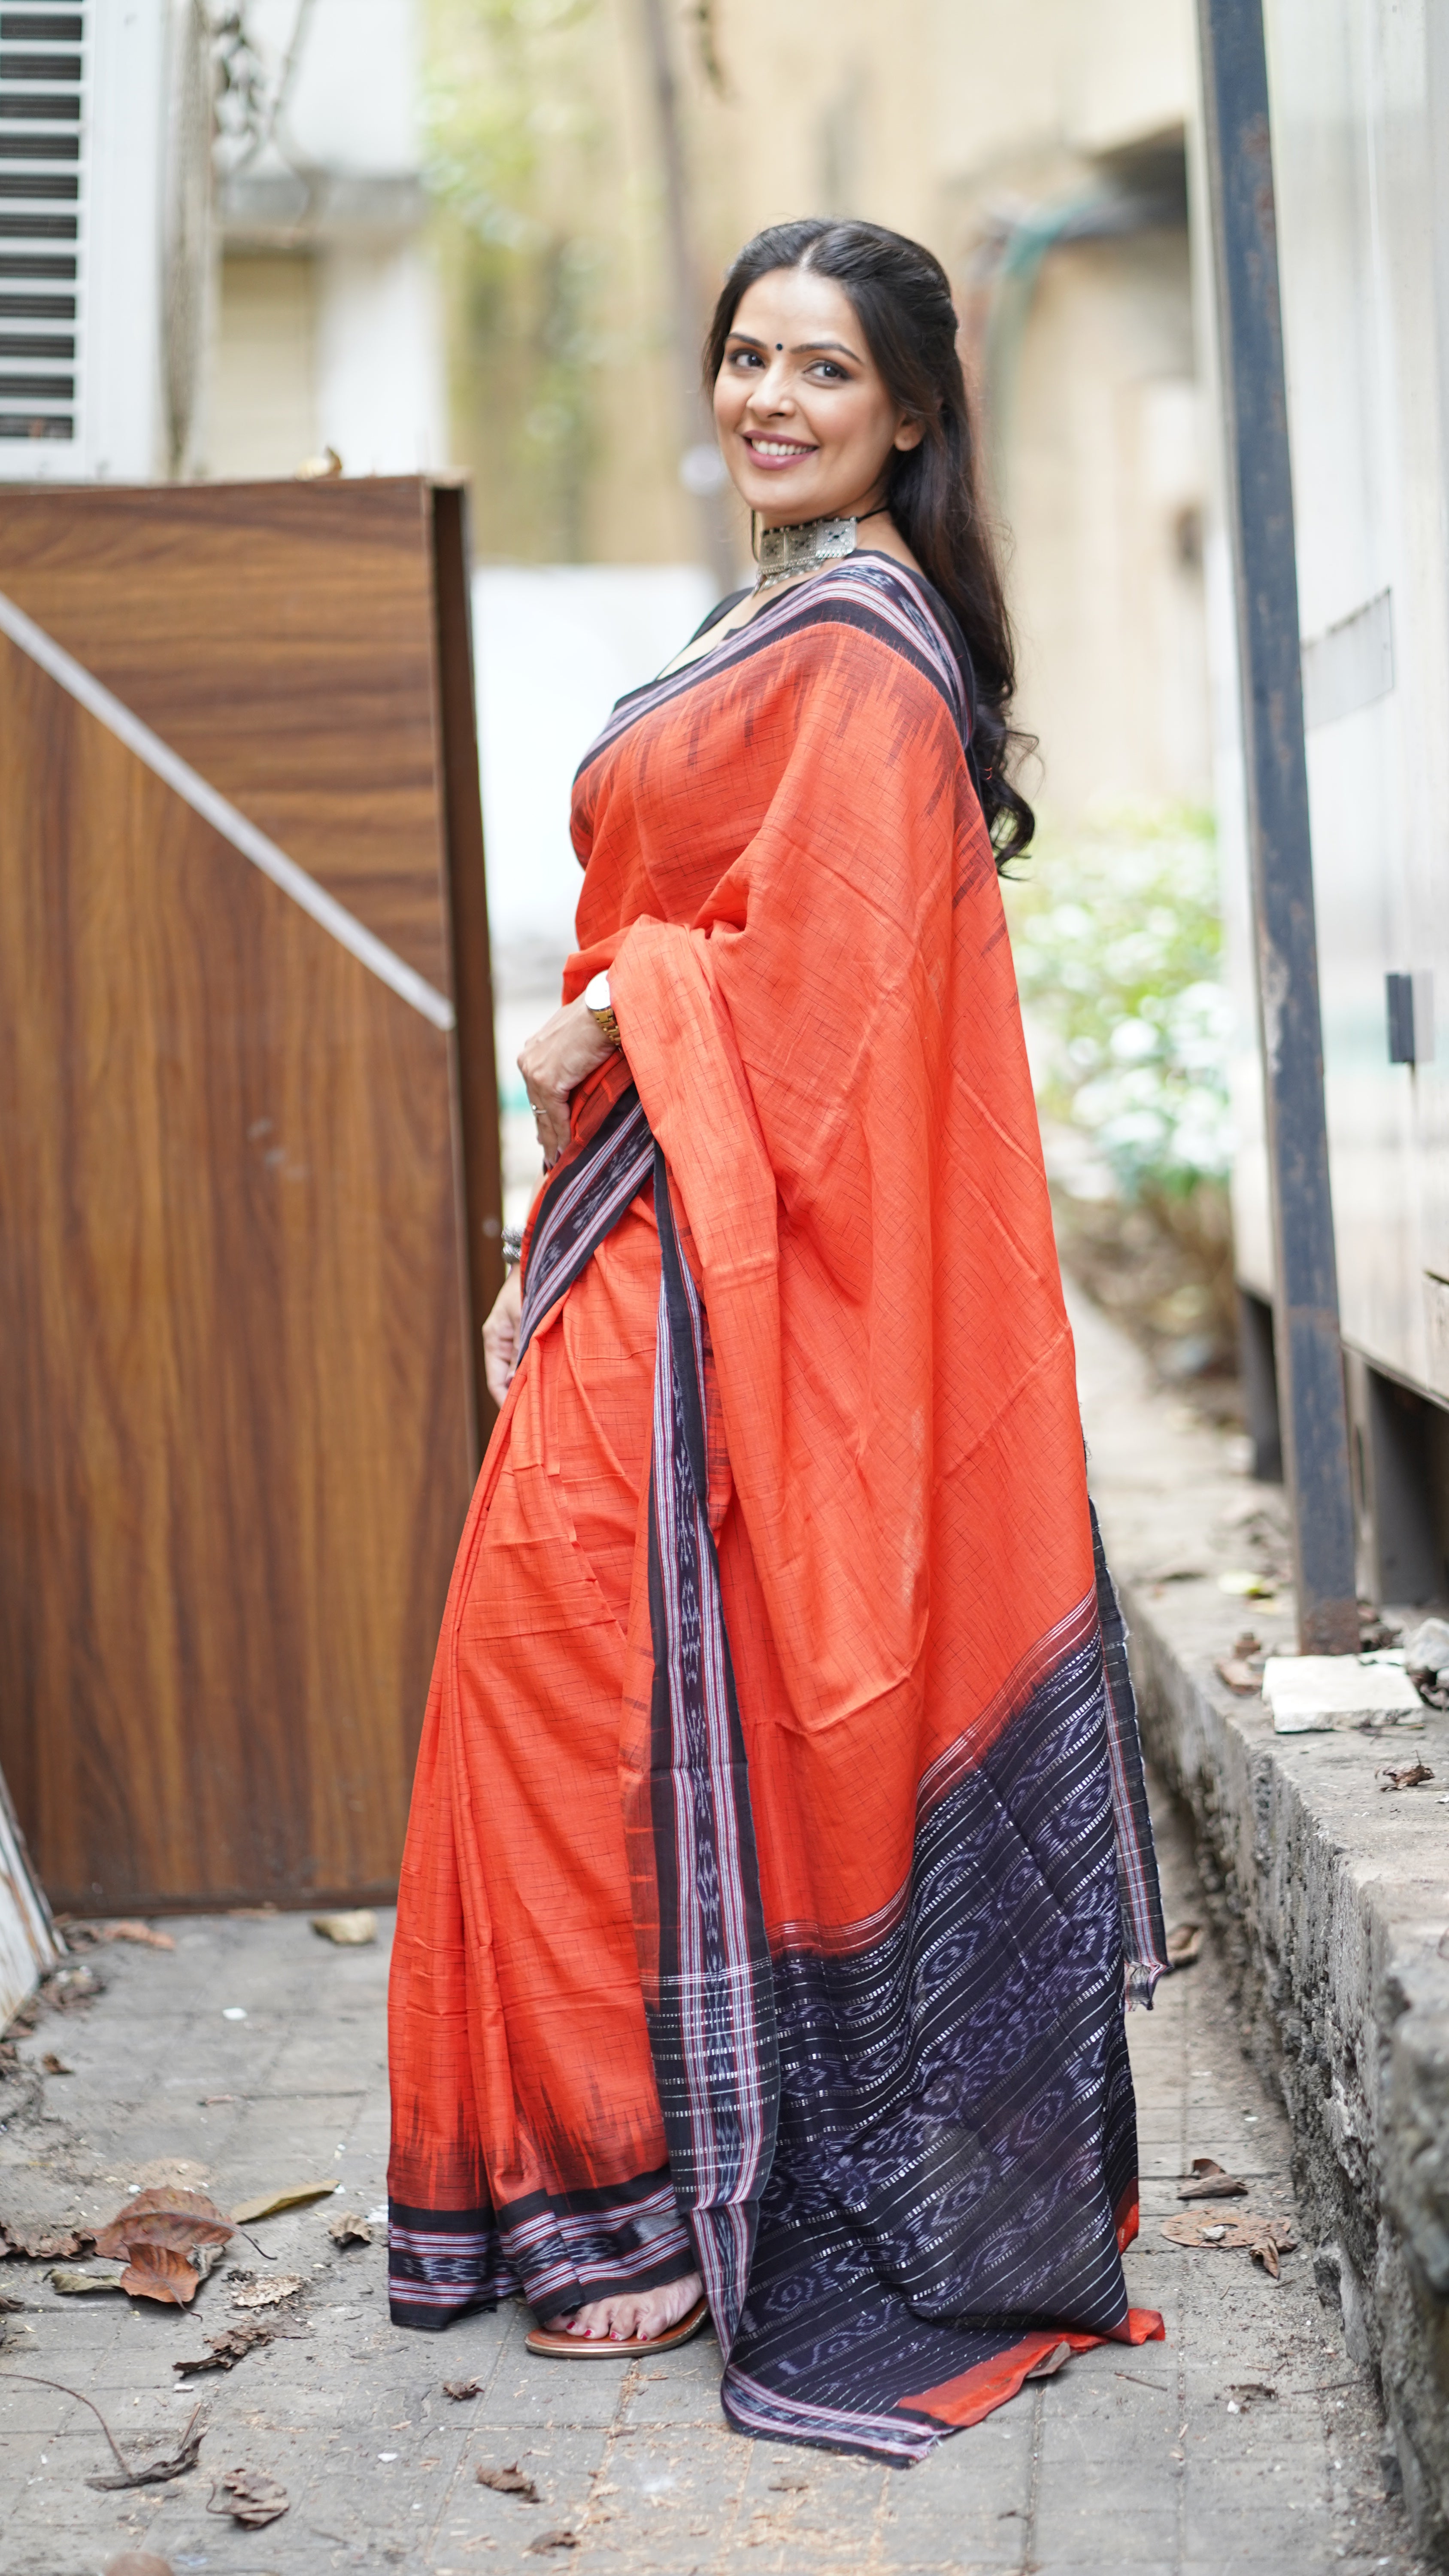 Raginni Khanna Sheer Yoke Lace Blouse | Fashion dresses, Indian beauty saree,  Saree designs